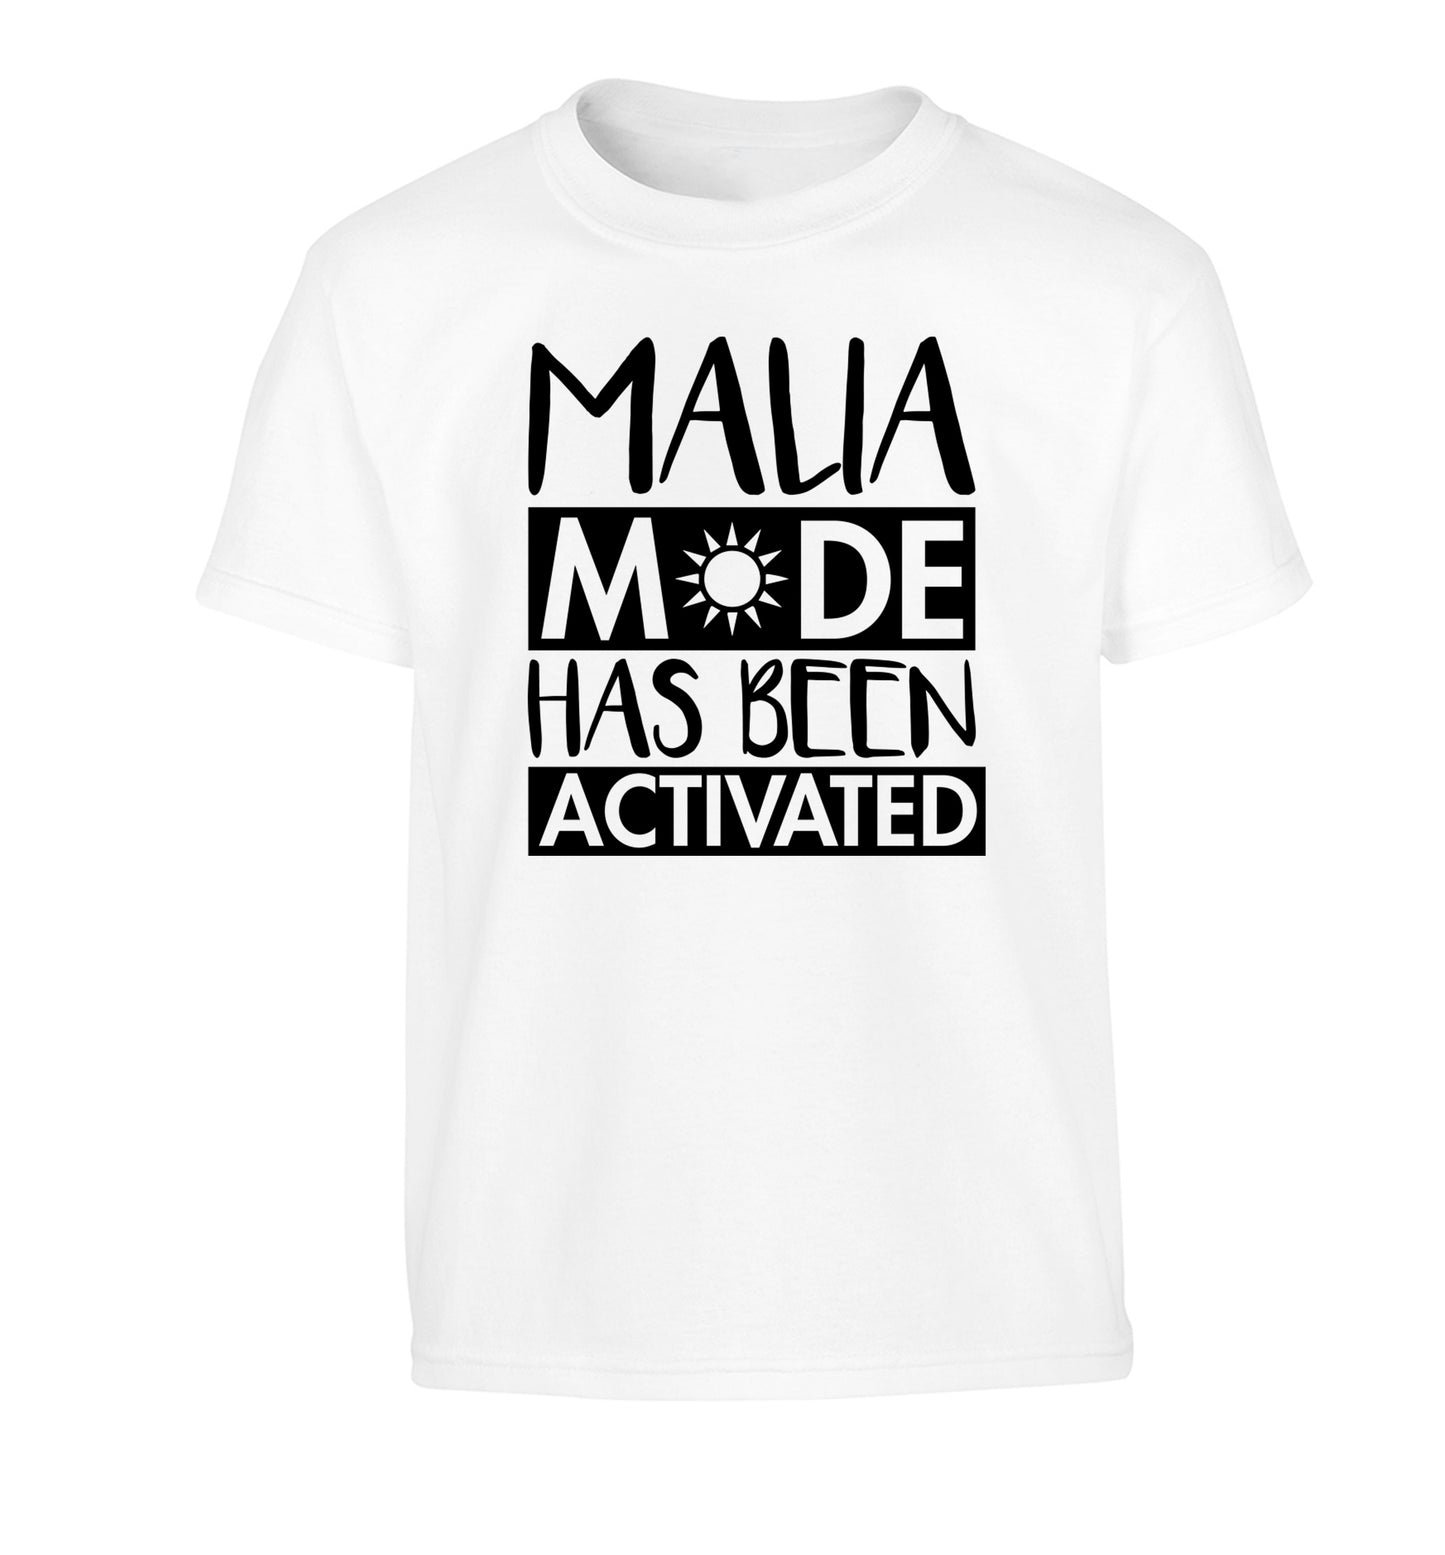 Malia mode has been activated Children's white Tshirt 12-13 Years